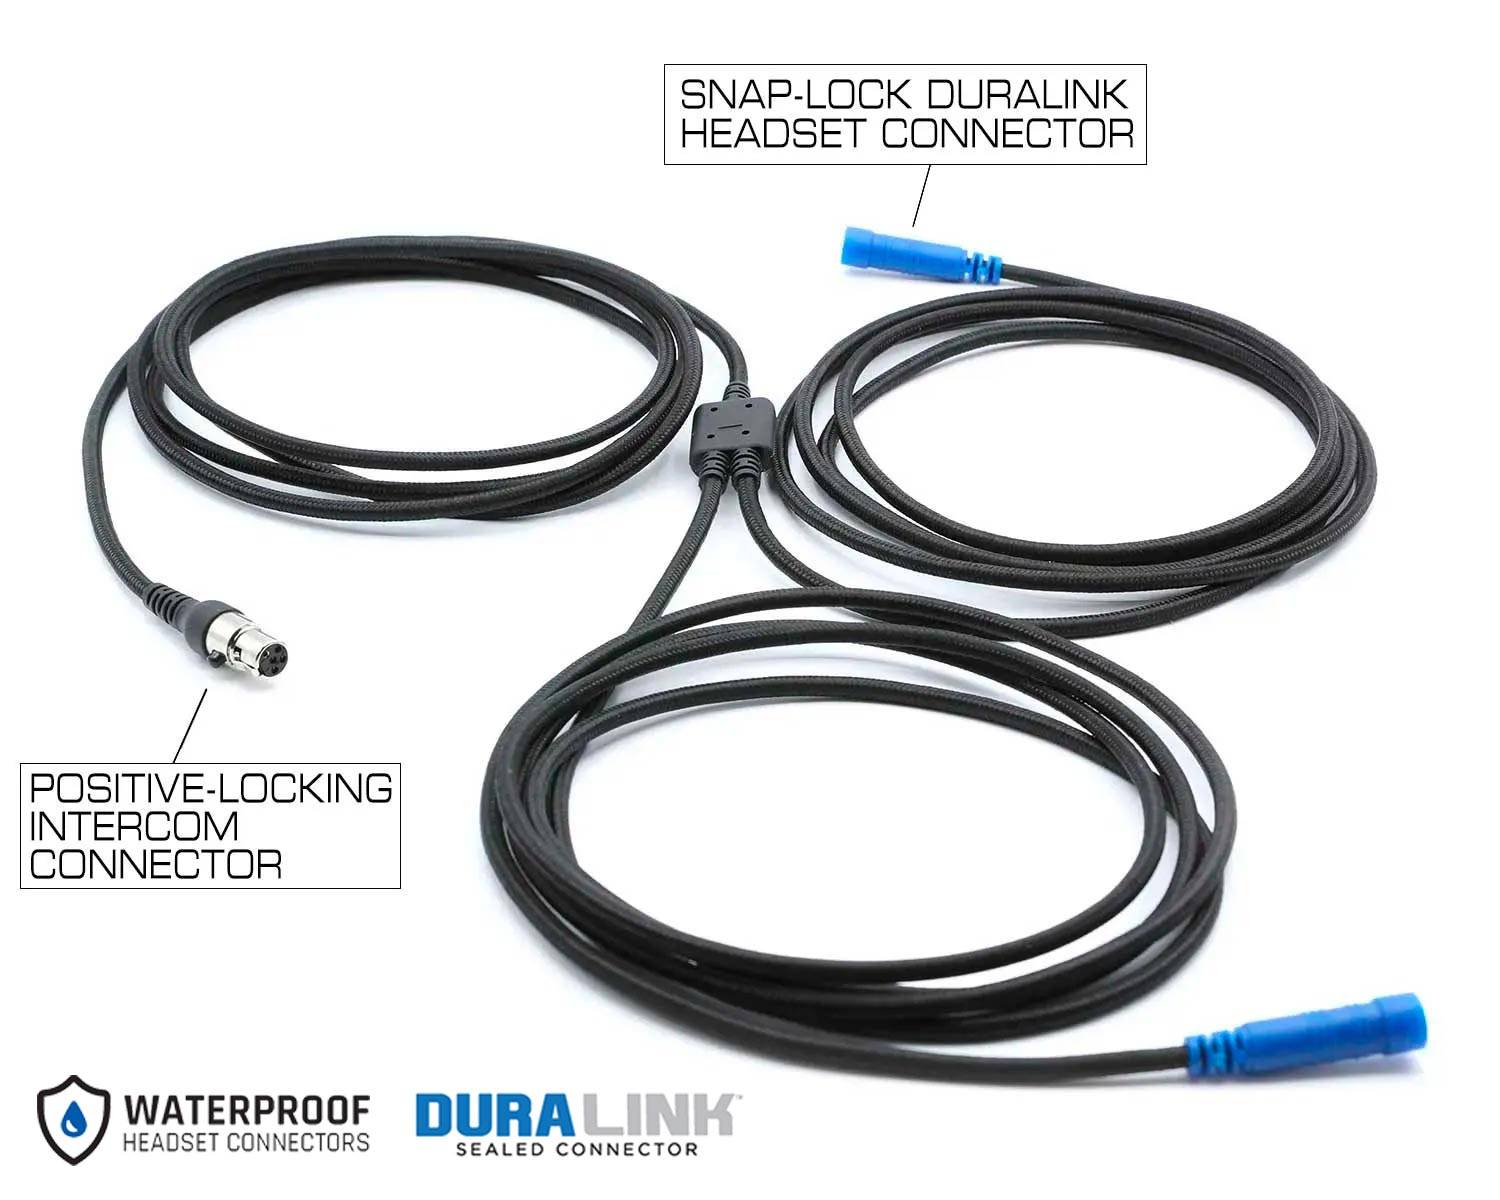 SUPER SPORT Straight Cable to Intercom Waterproof DuraLink